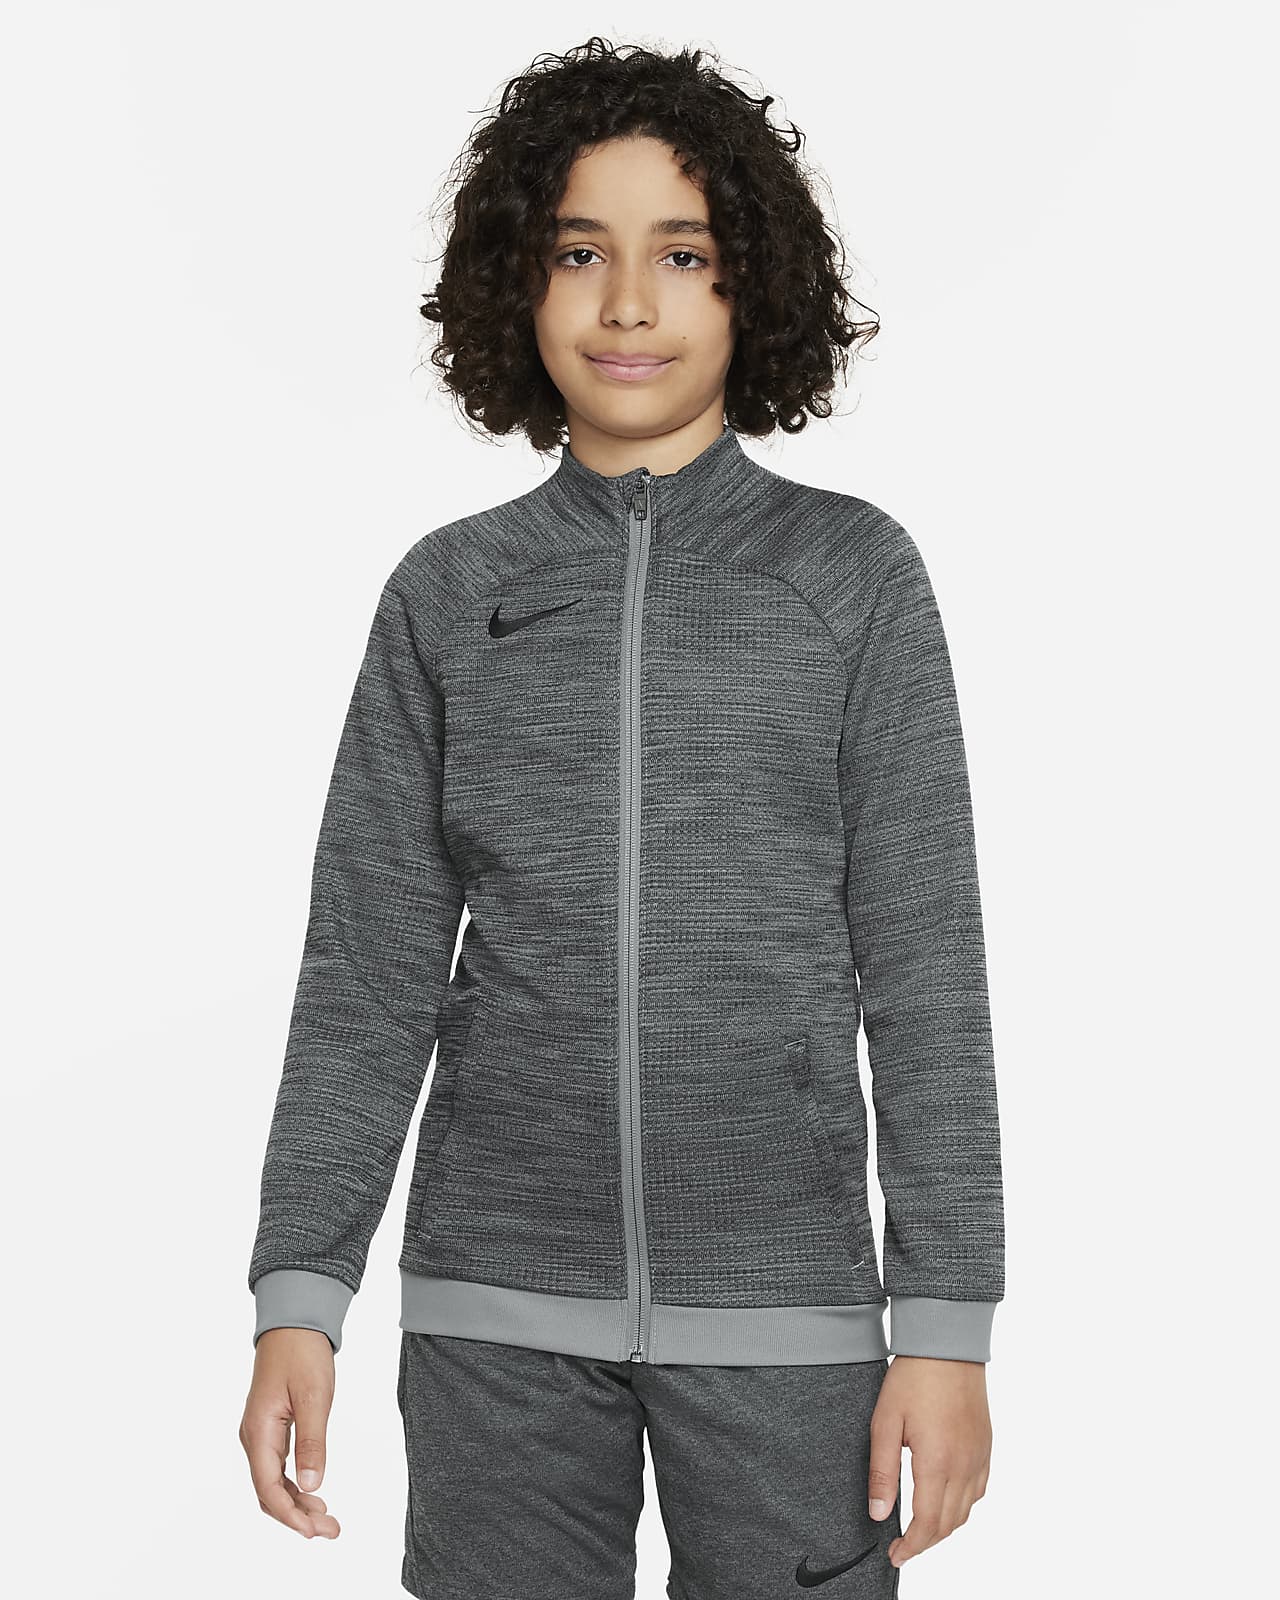 Nike Dri-FIT Academy Fußball-Track-Jacket für ältere Kinder